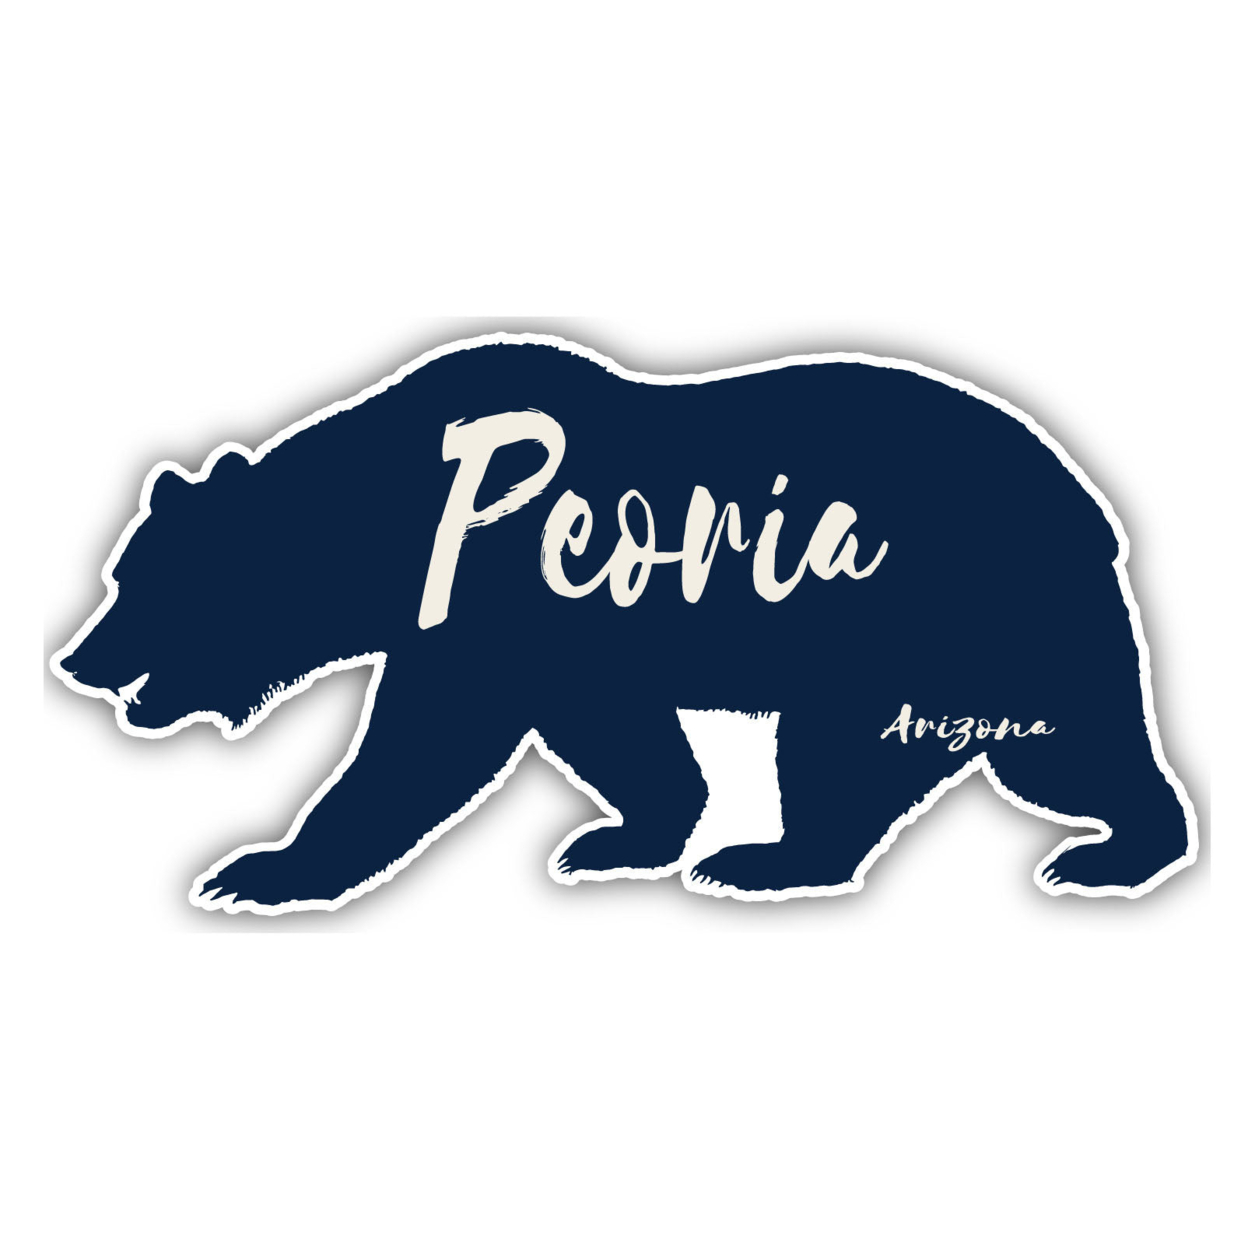 Peoria Arizona Souvenir Decorative Stickers (Choose Theme And Size) - Single Unit, 2-Inch, Bear